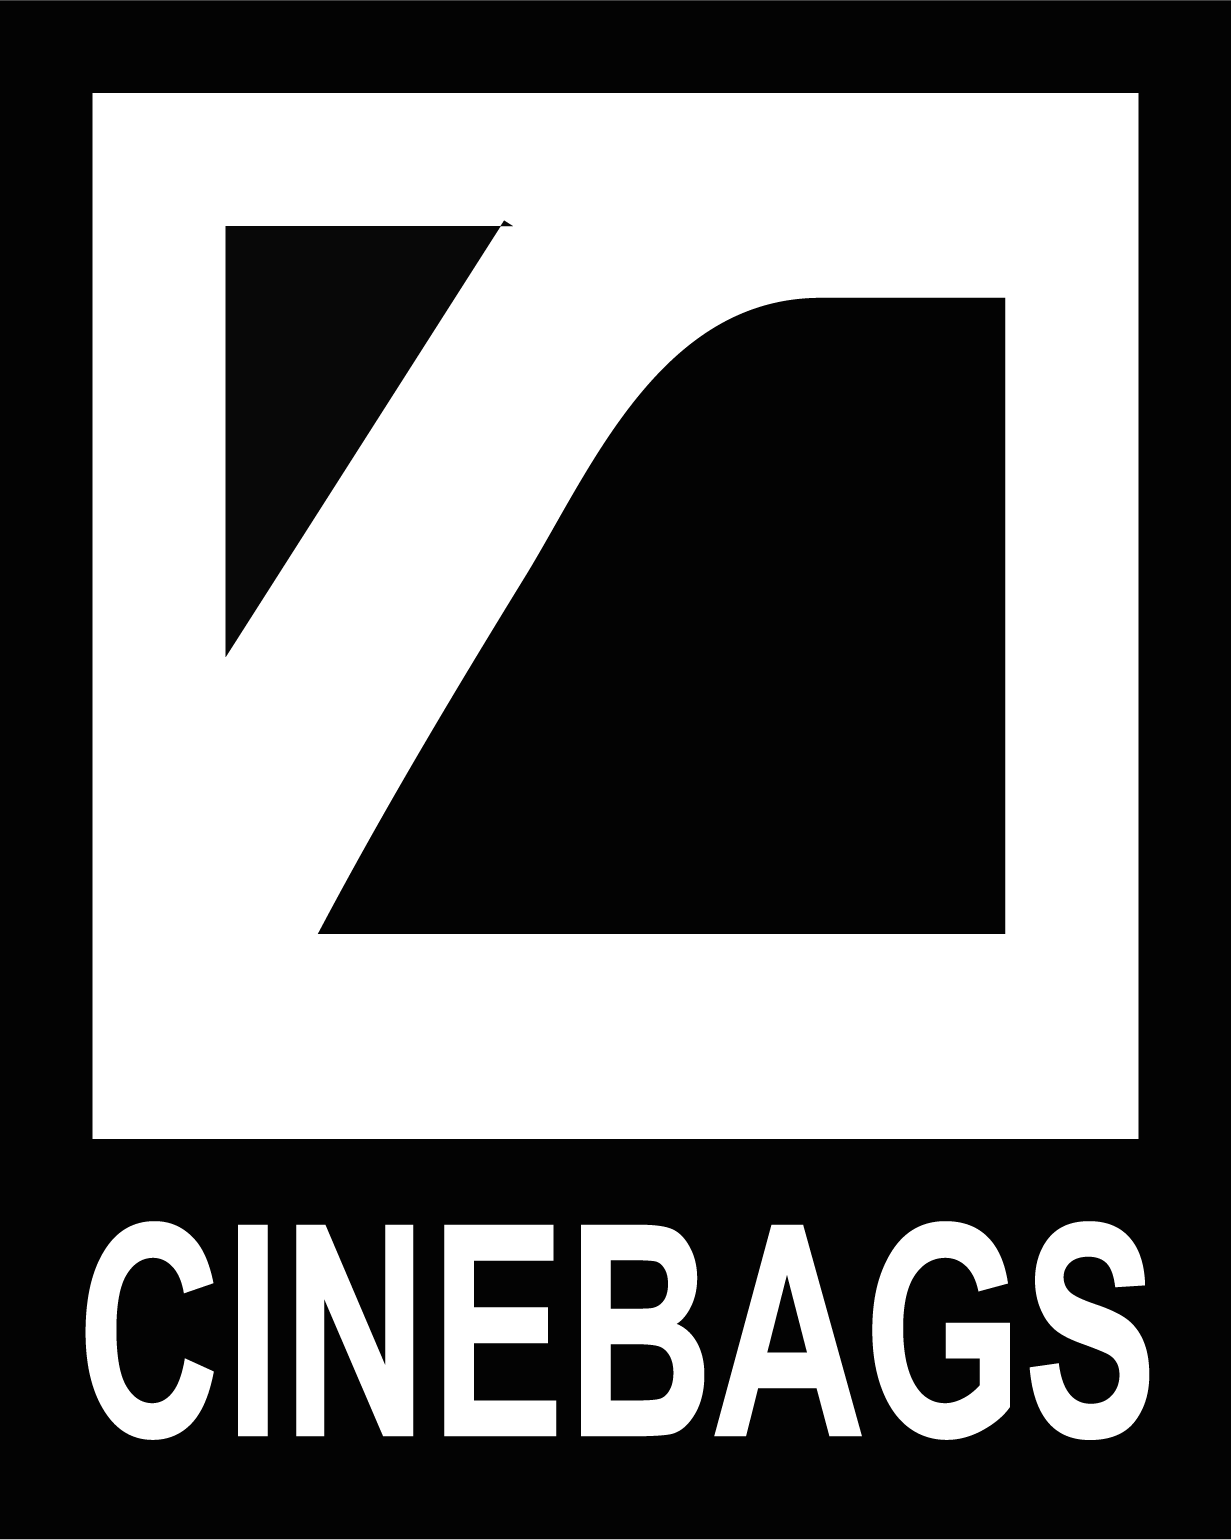 CineBags